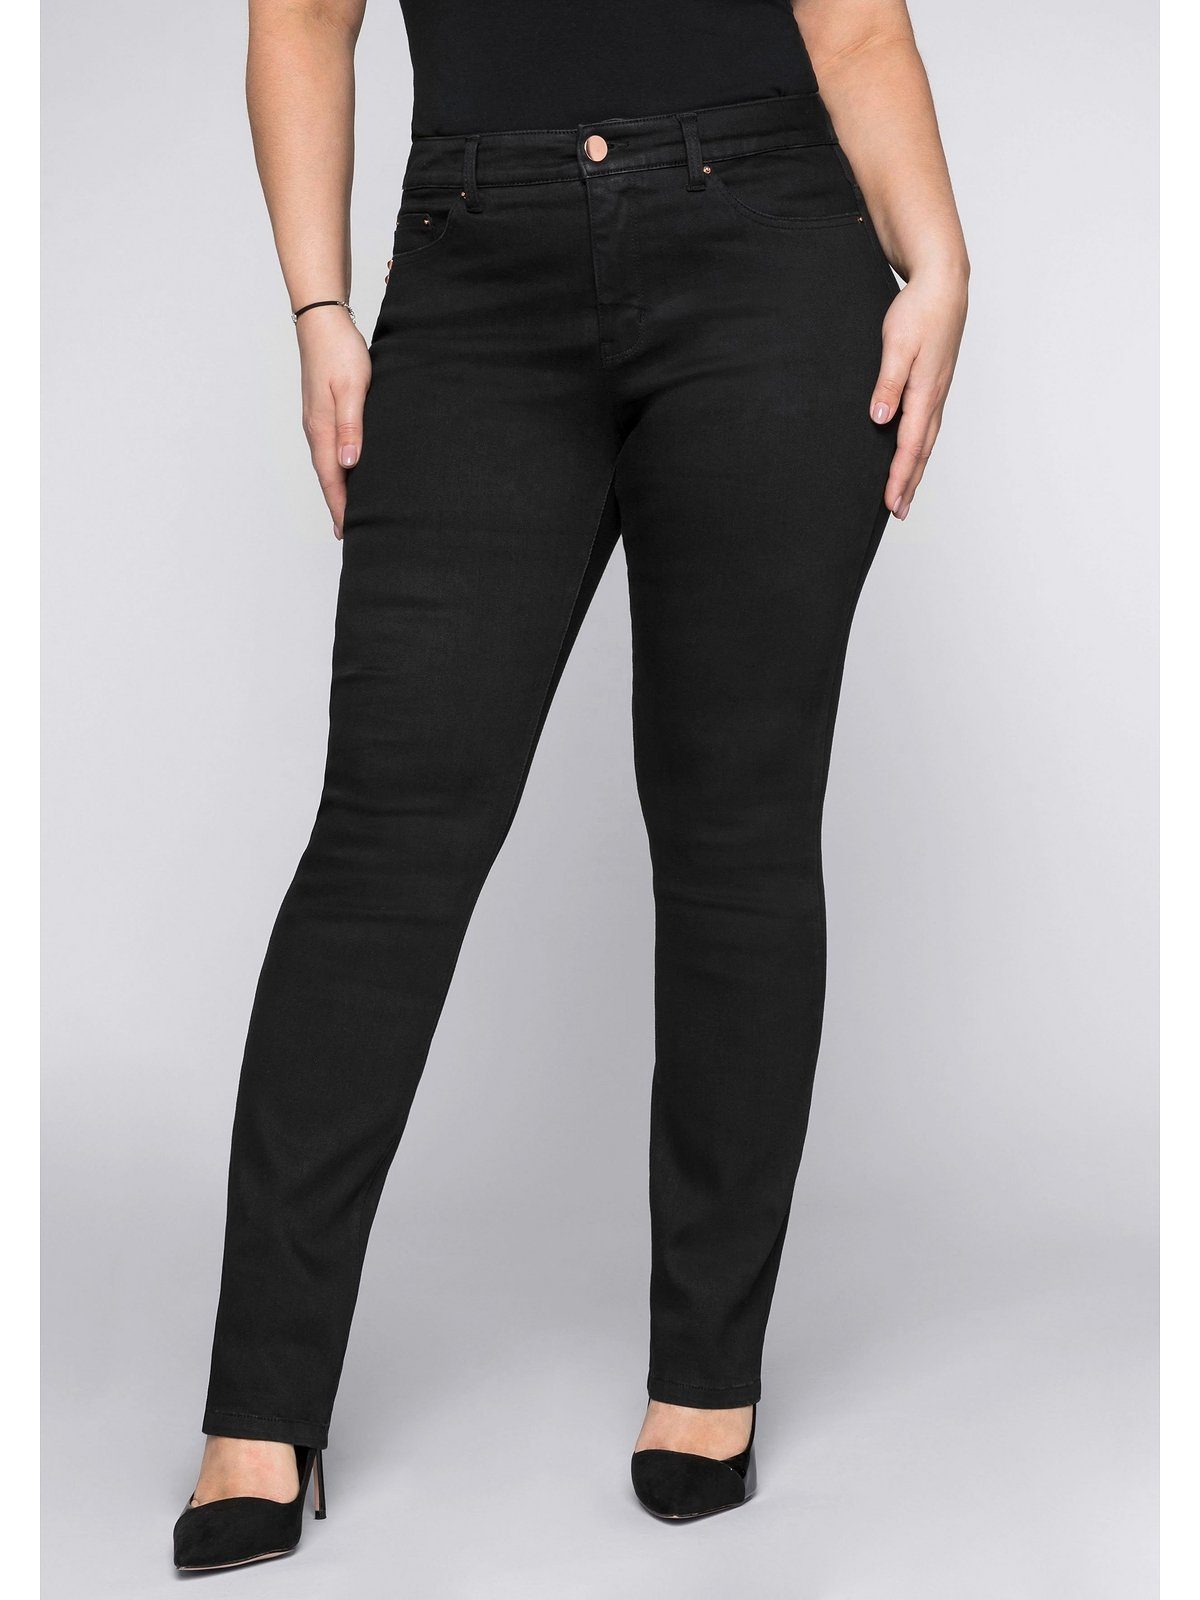 Sheego Bodyforming-Effekt Große Skinny black Denim mit Stretch-Jeans Größen